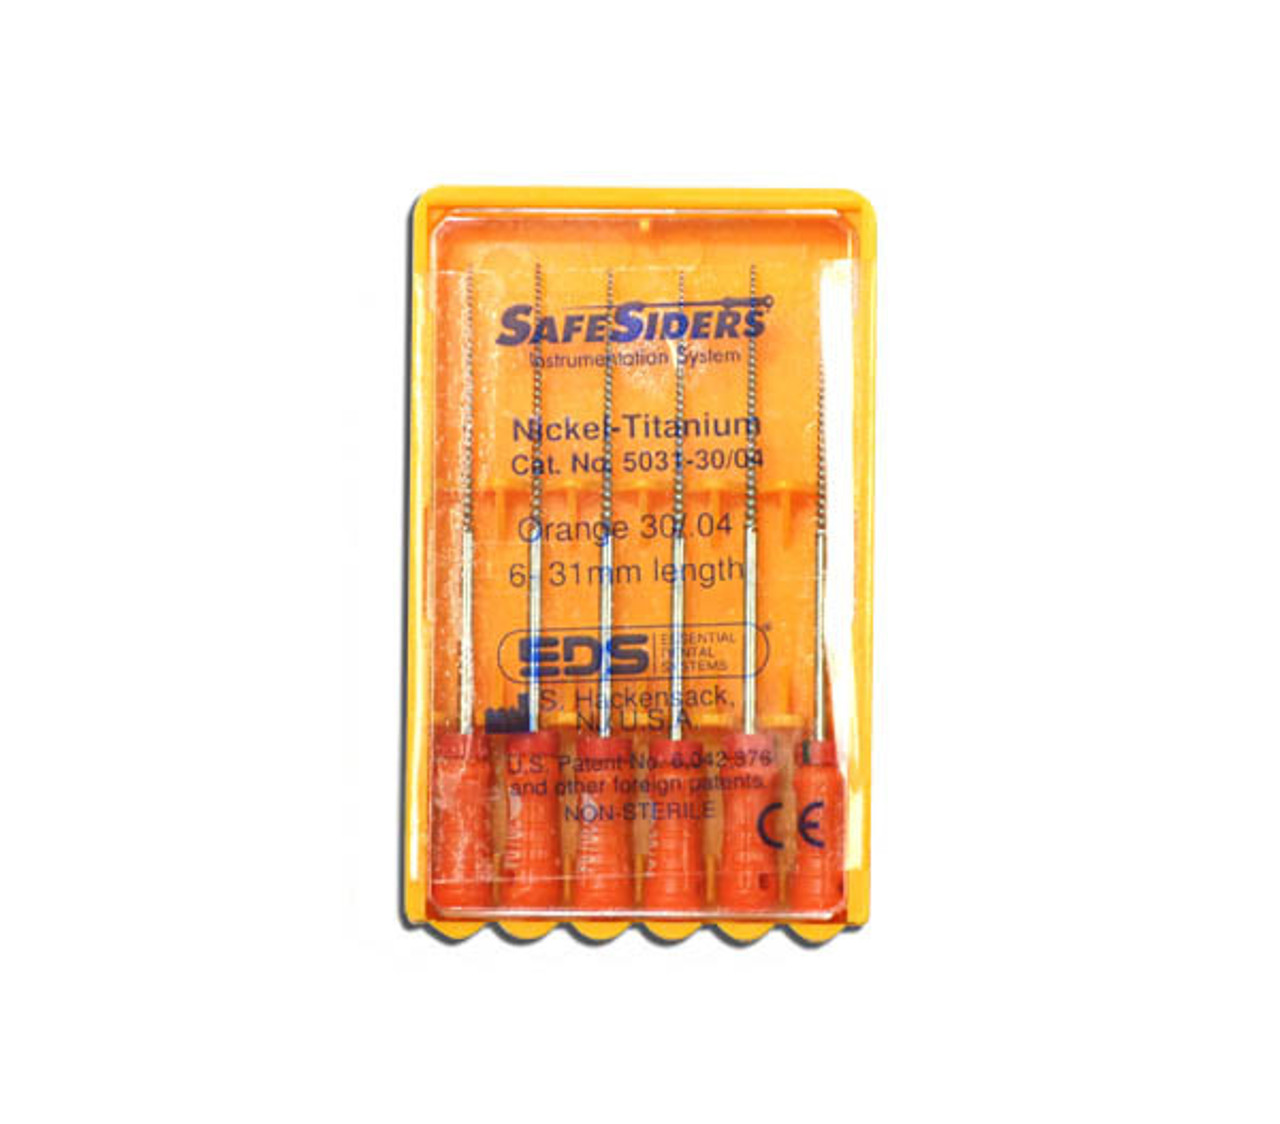 Safesiders Refill Kits 31mm Length - Orange 30/.04-